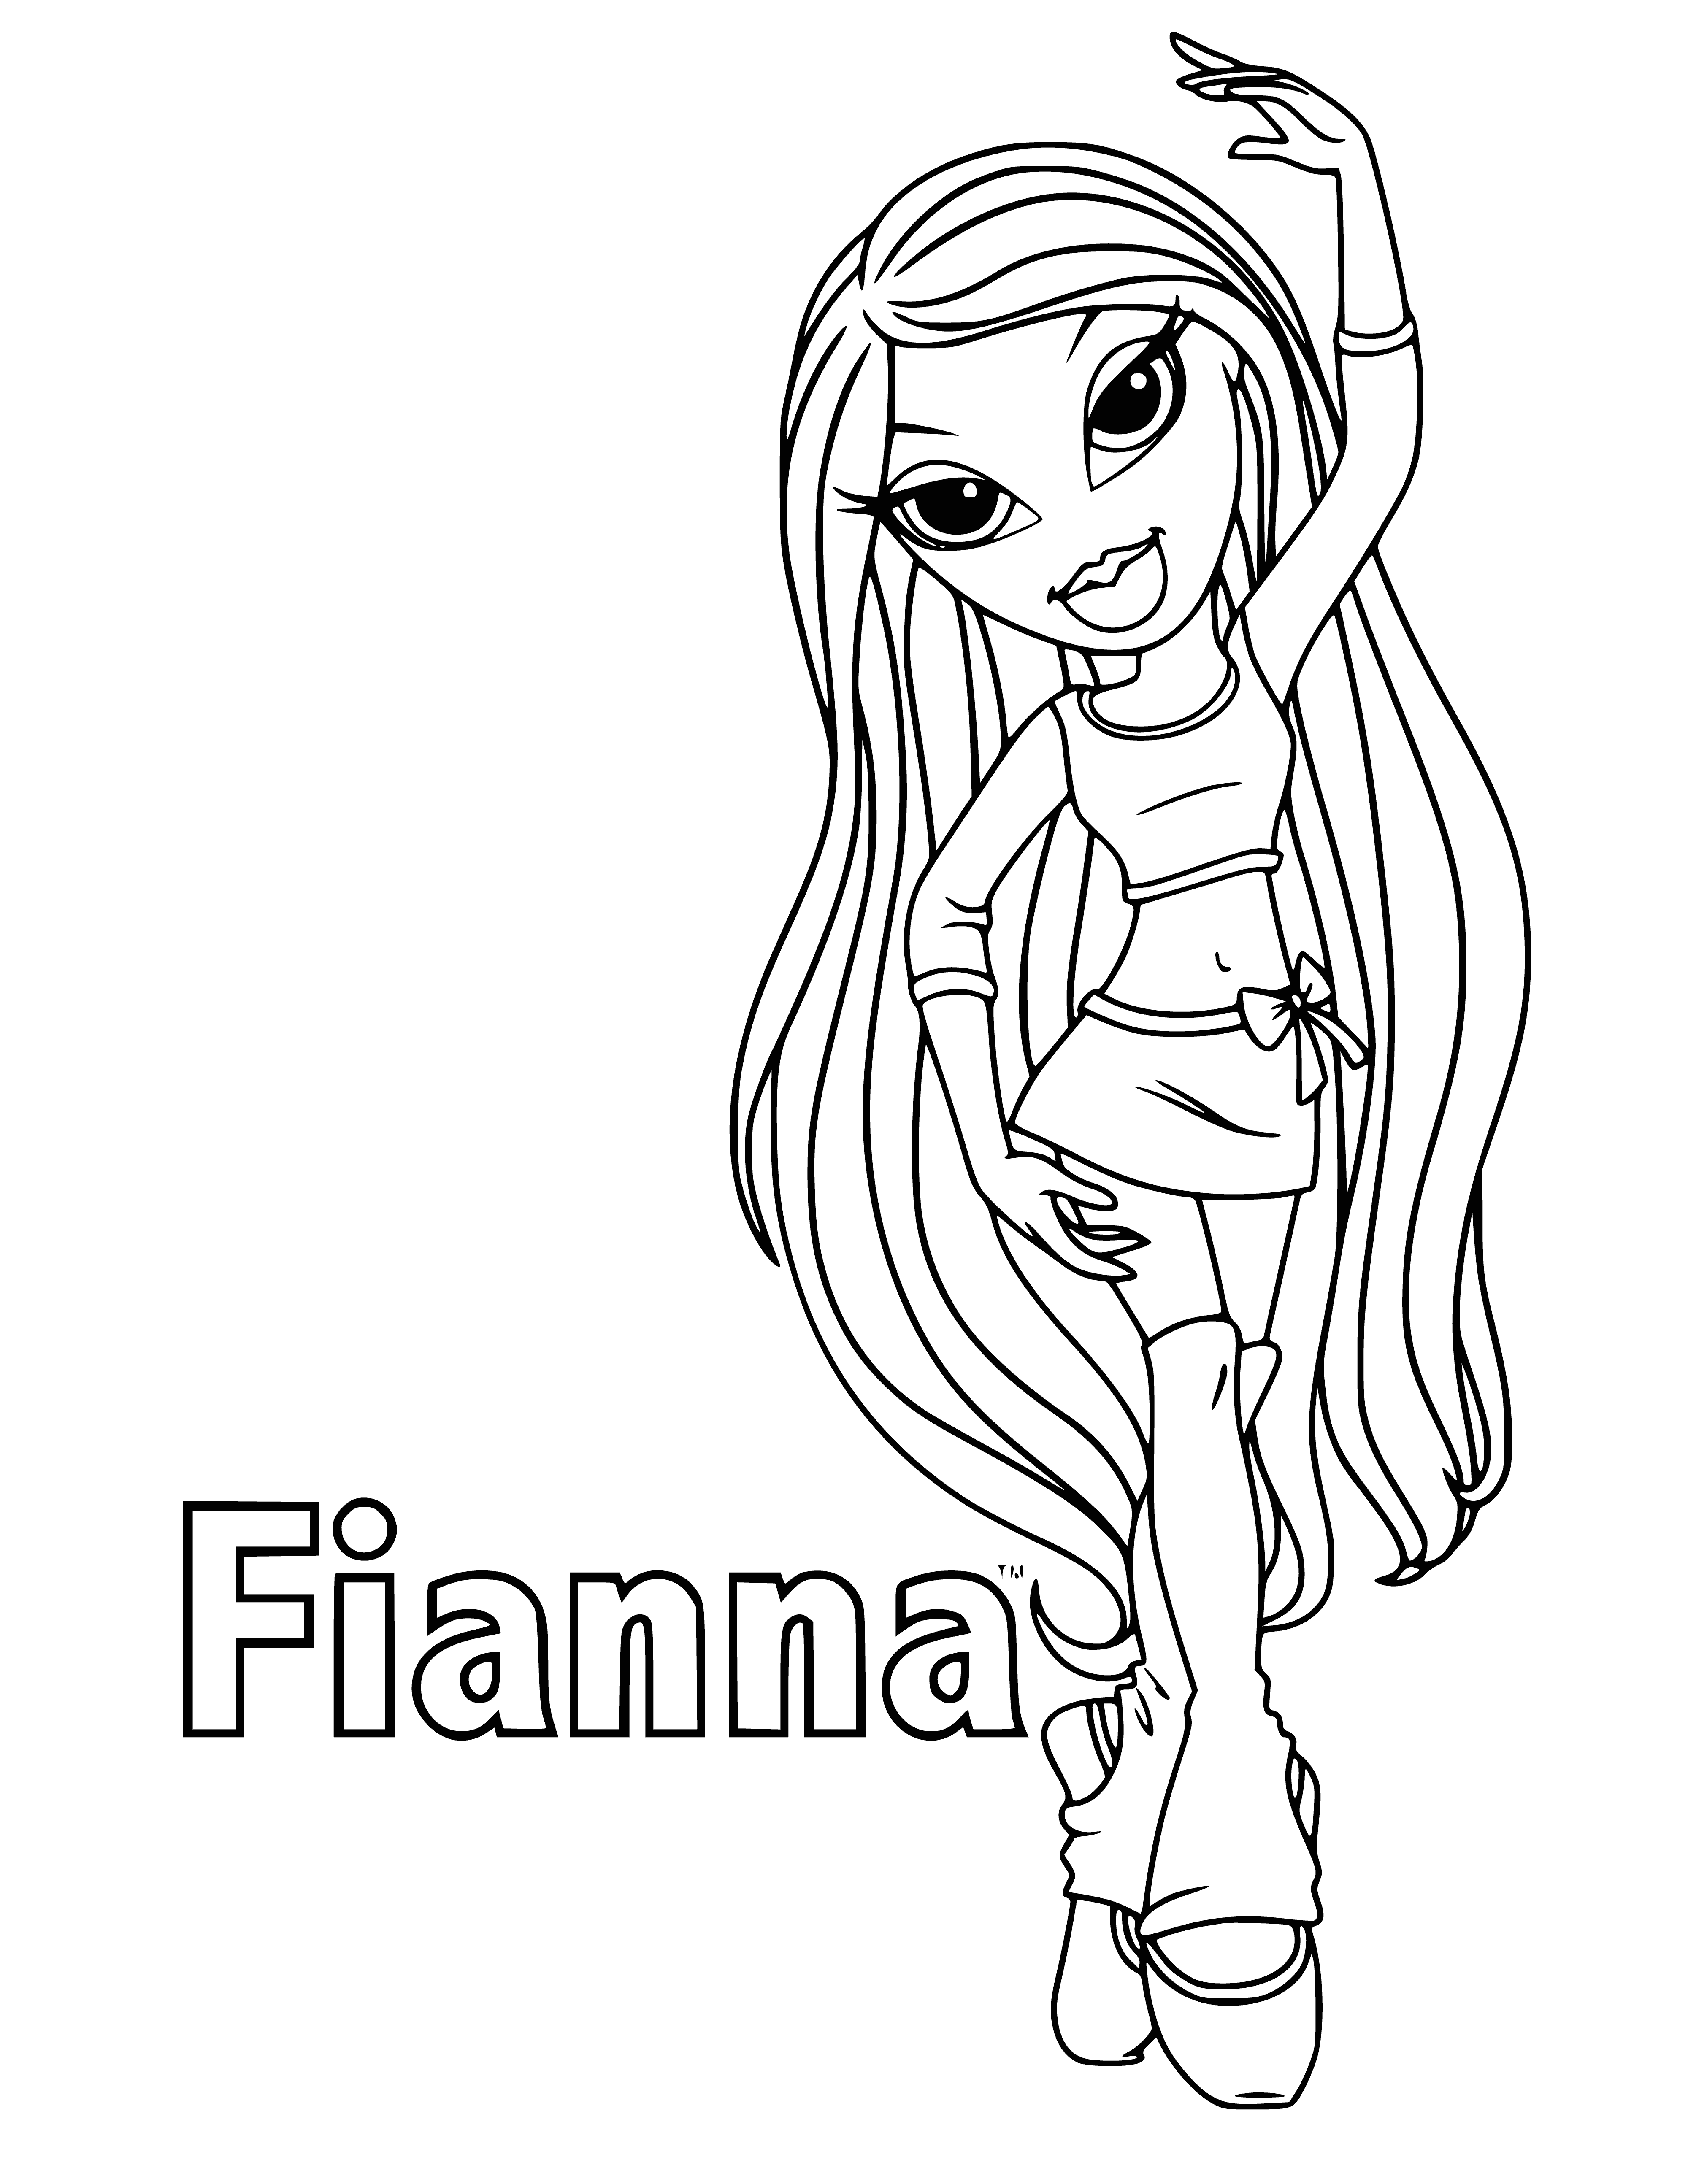 Bratz Fianna coloring page